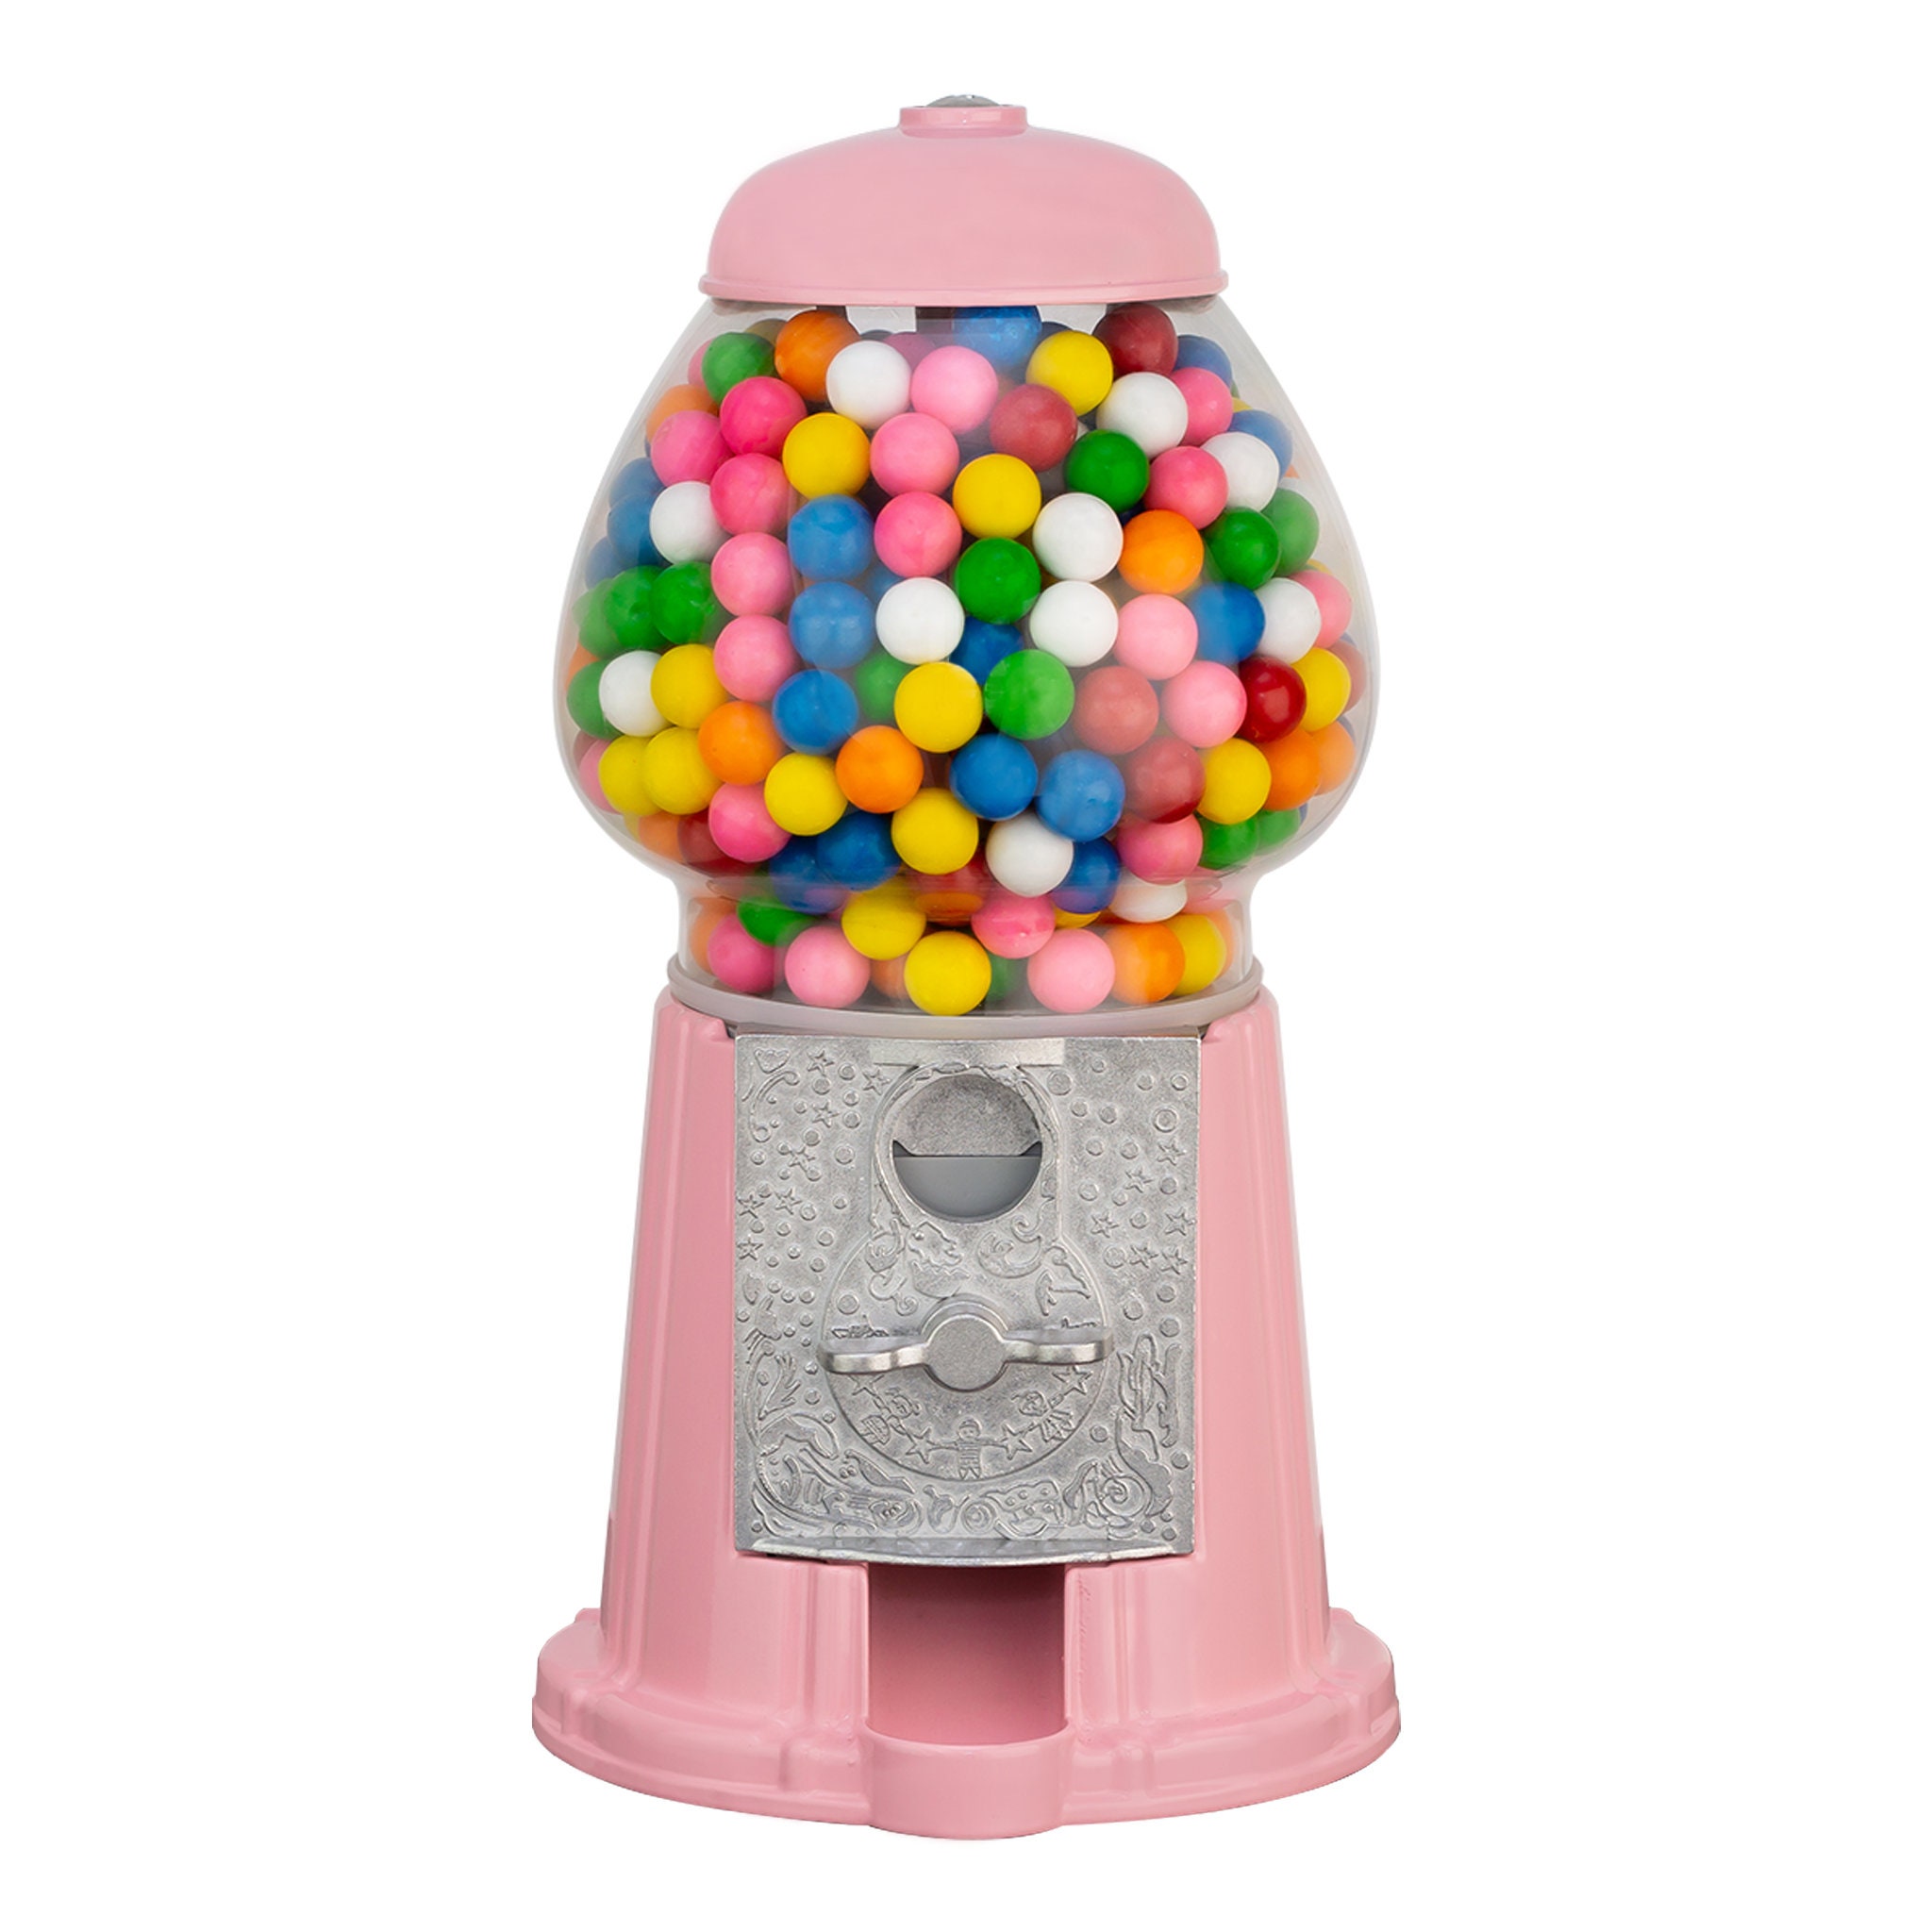 Gumball Dreams Gumball Machine & Candy Dispenser - Light Purple